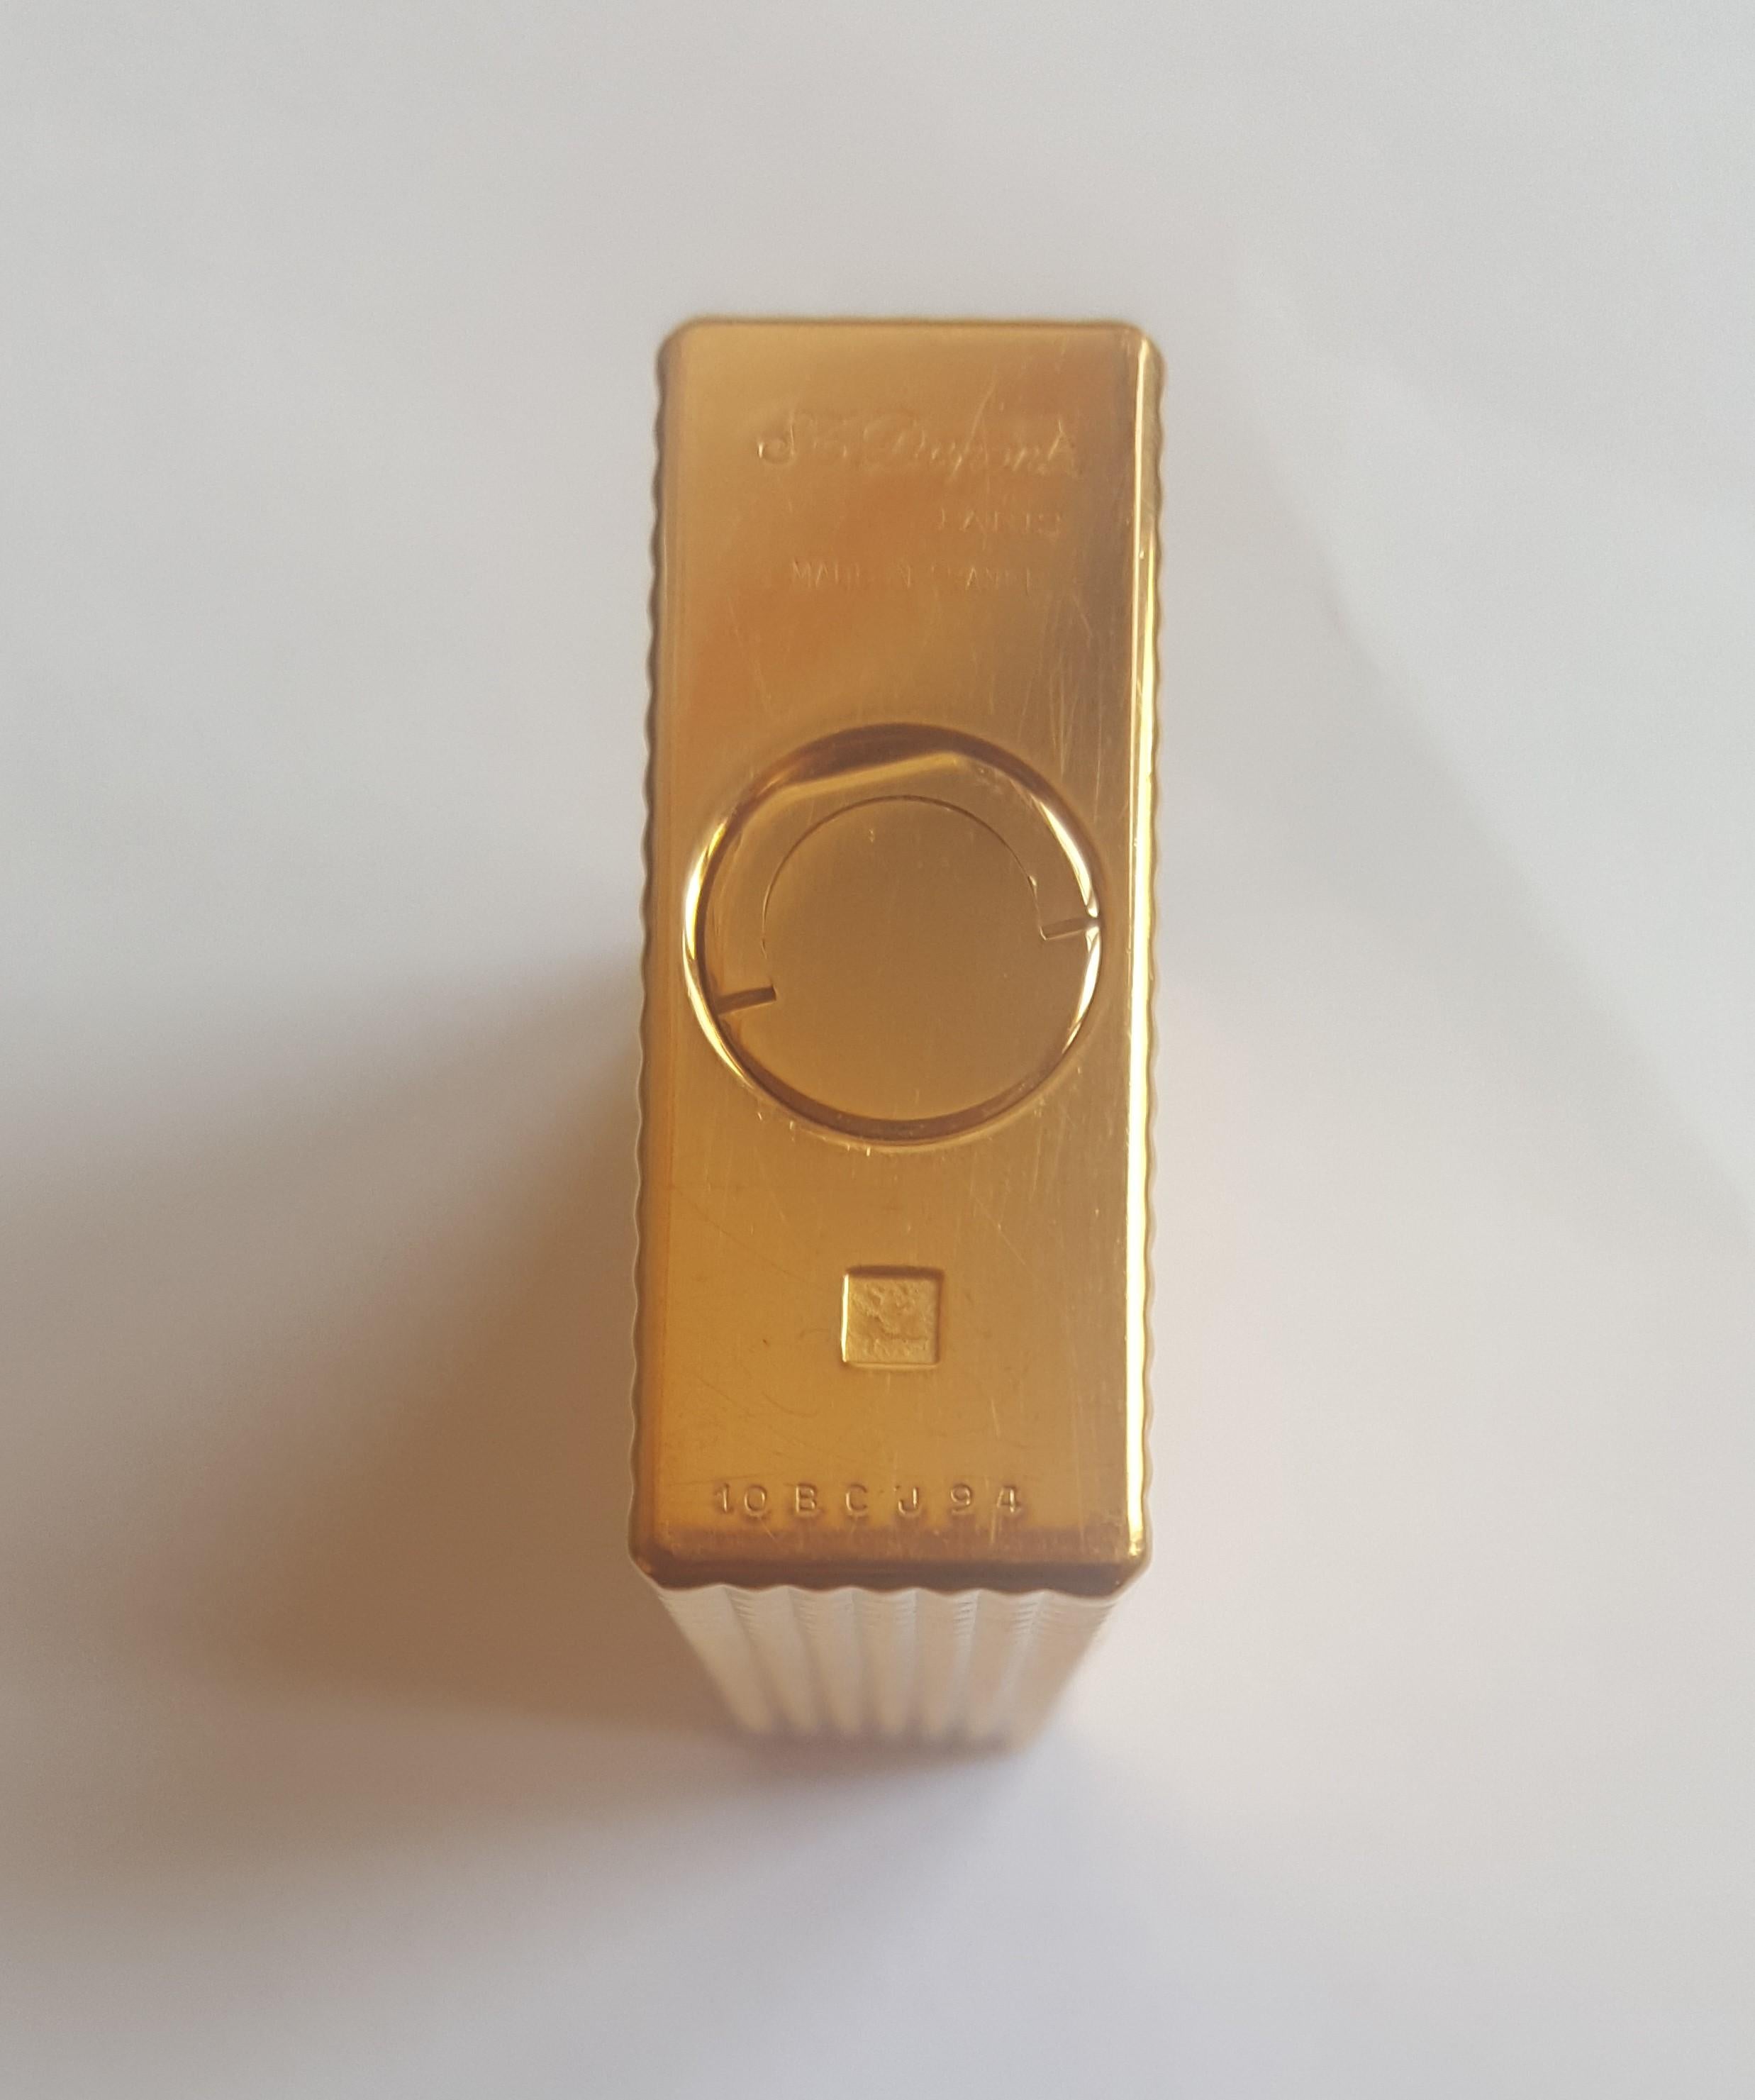 1970 18 Karat Yellow Gold St. Dupont Lighter, Gold Filled, Diamond Head Pattern 1